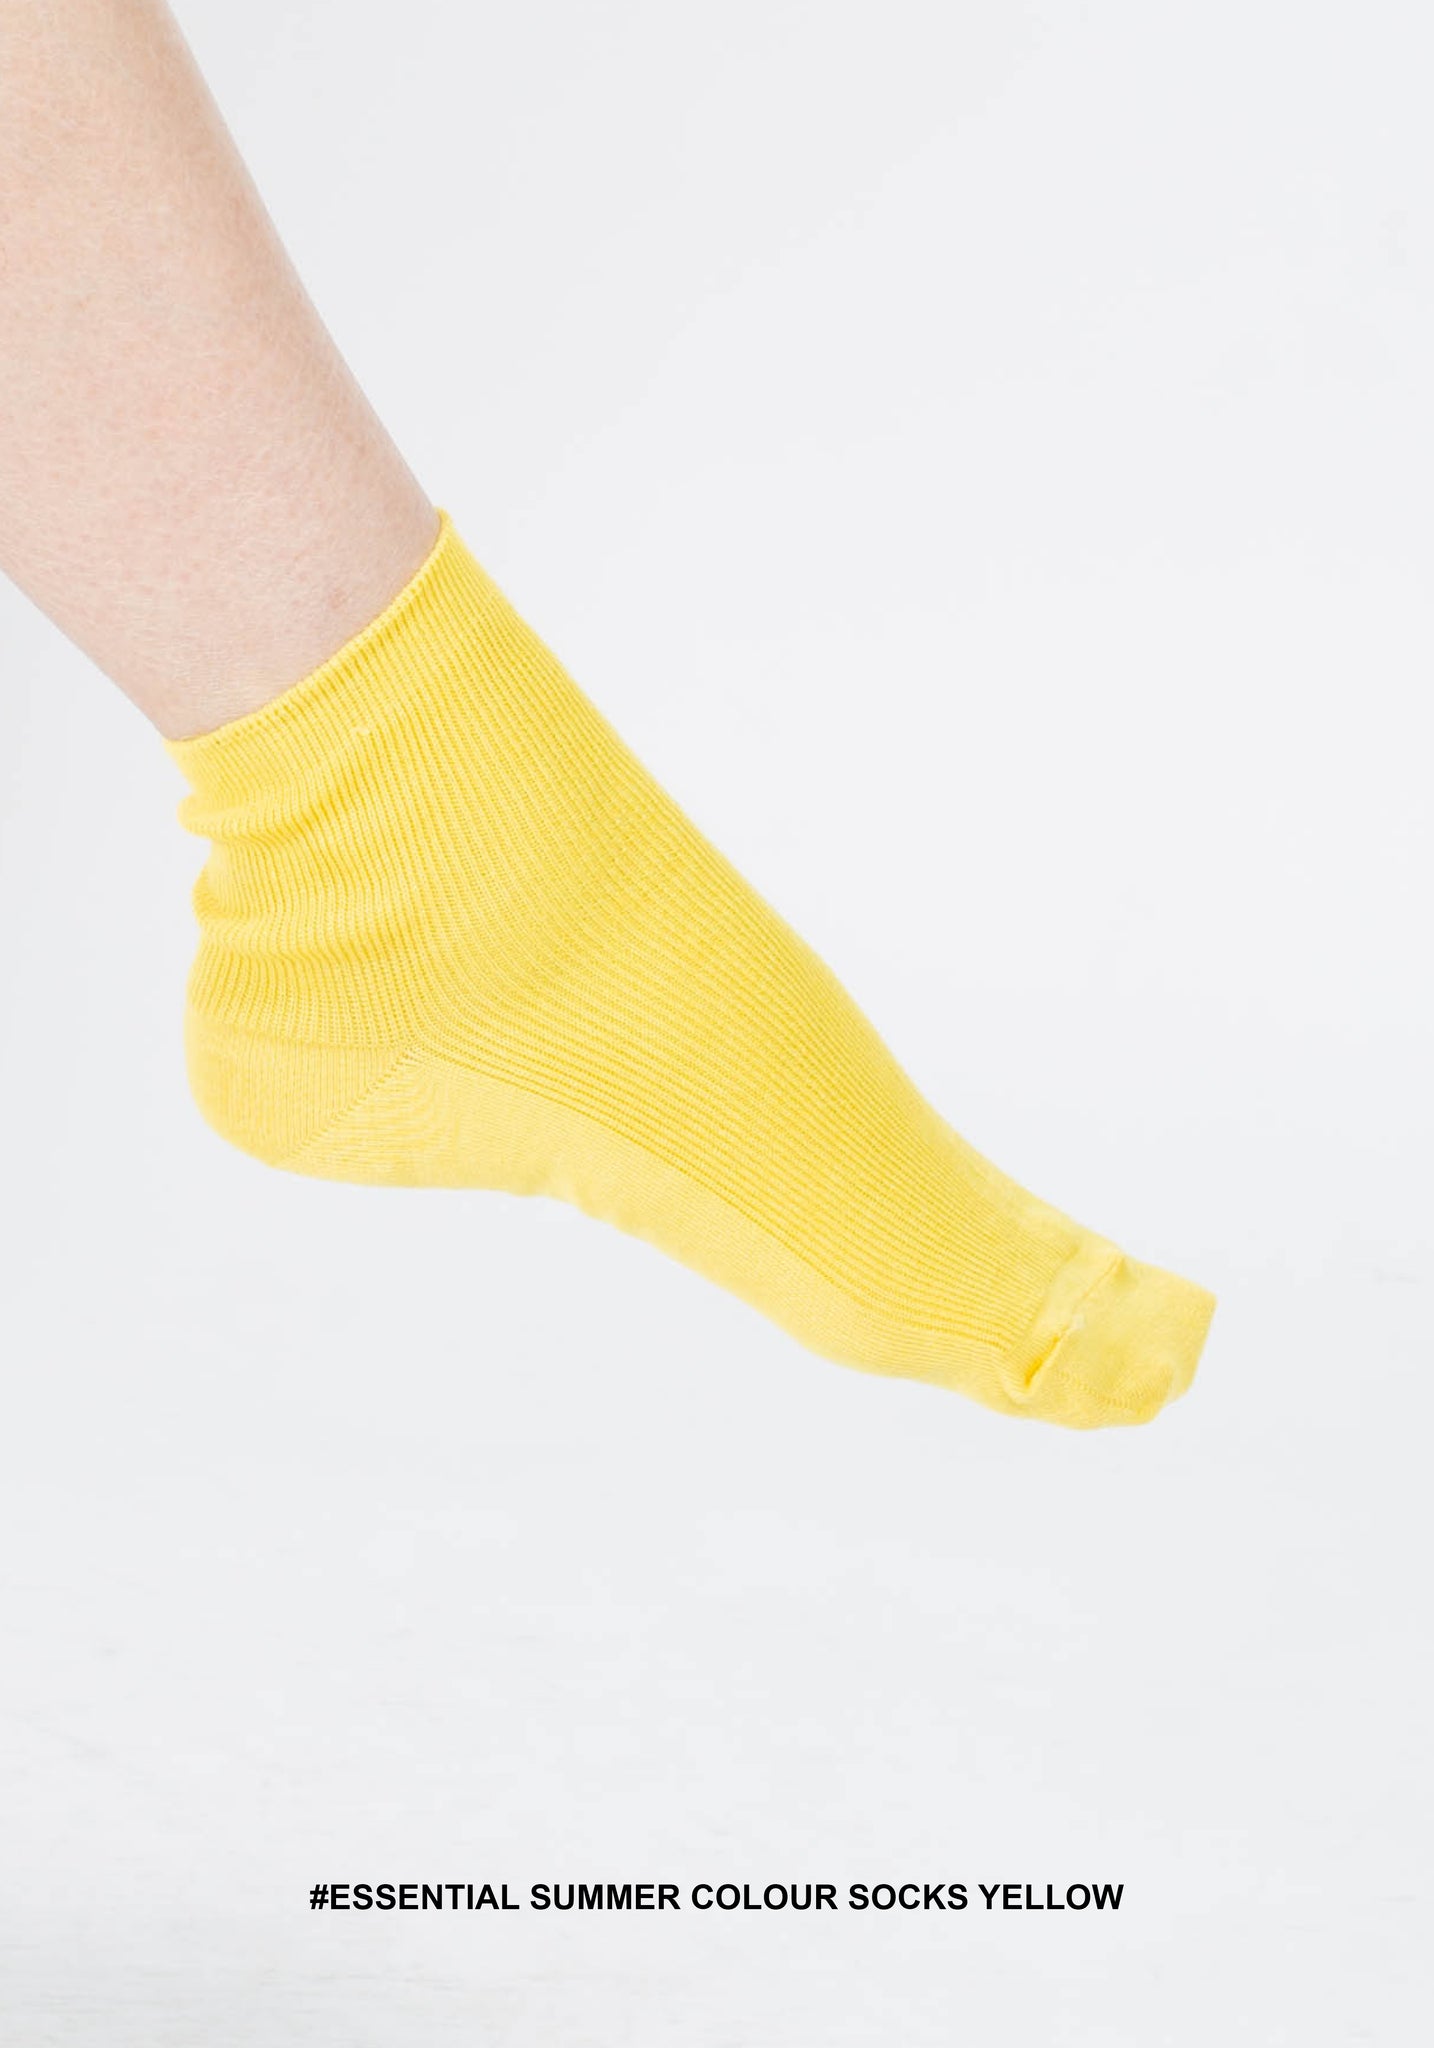 Essential Summer Colour Socks Yellow